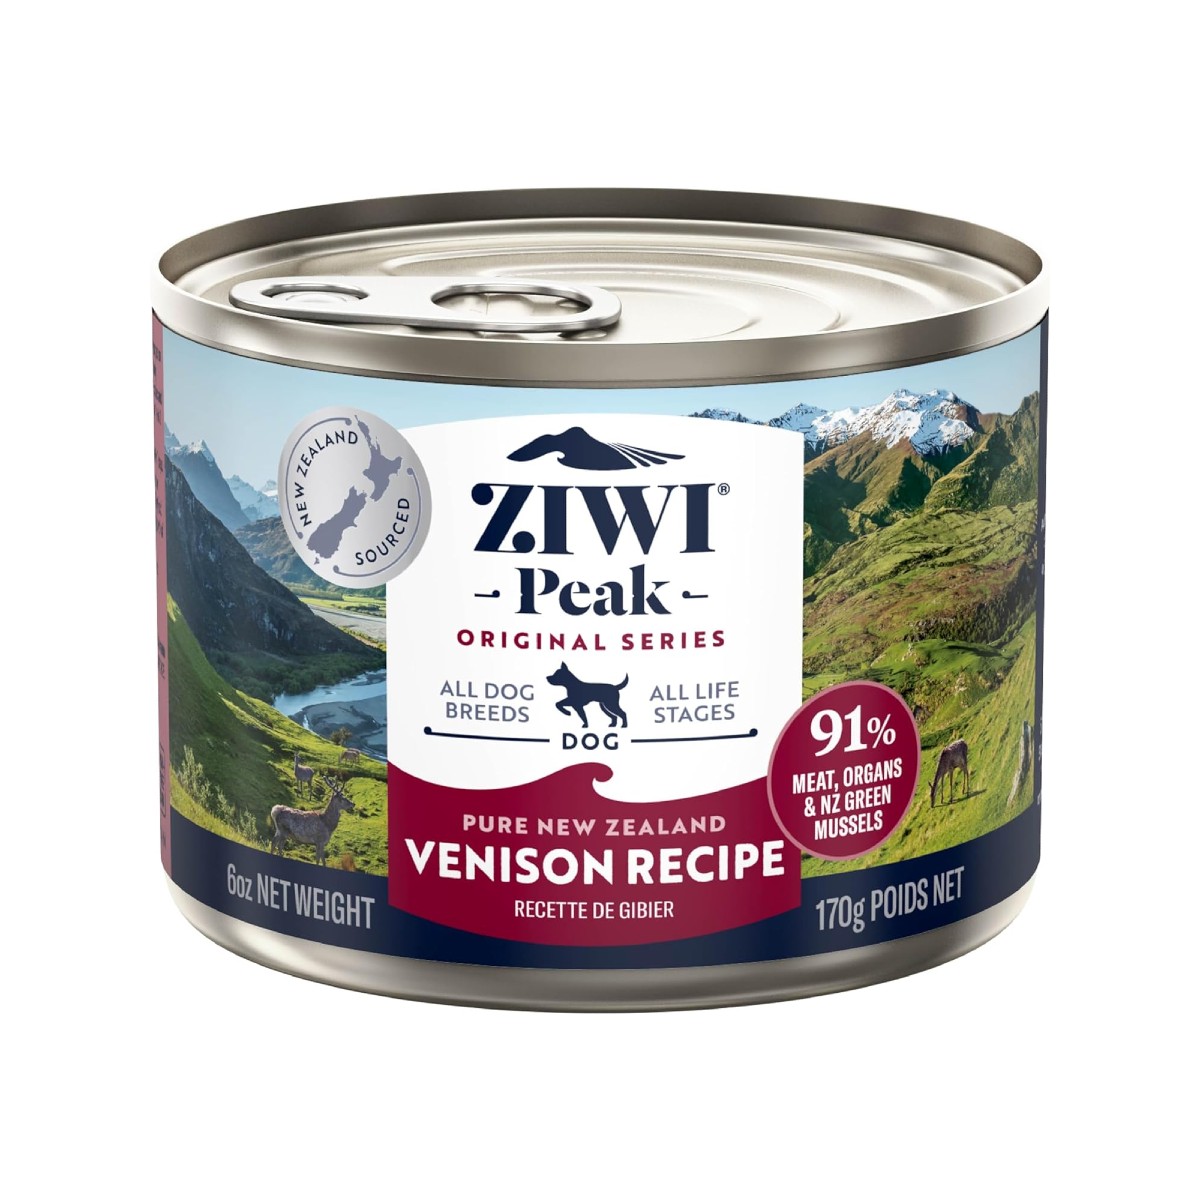 Ziwi Peak Original Series Wet Dog Food - Venison